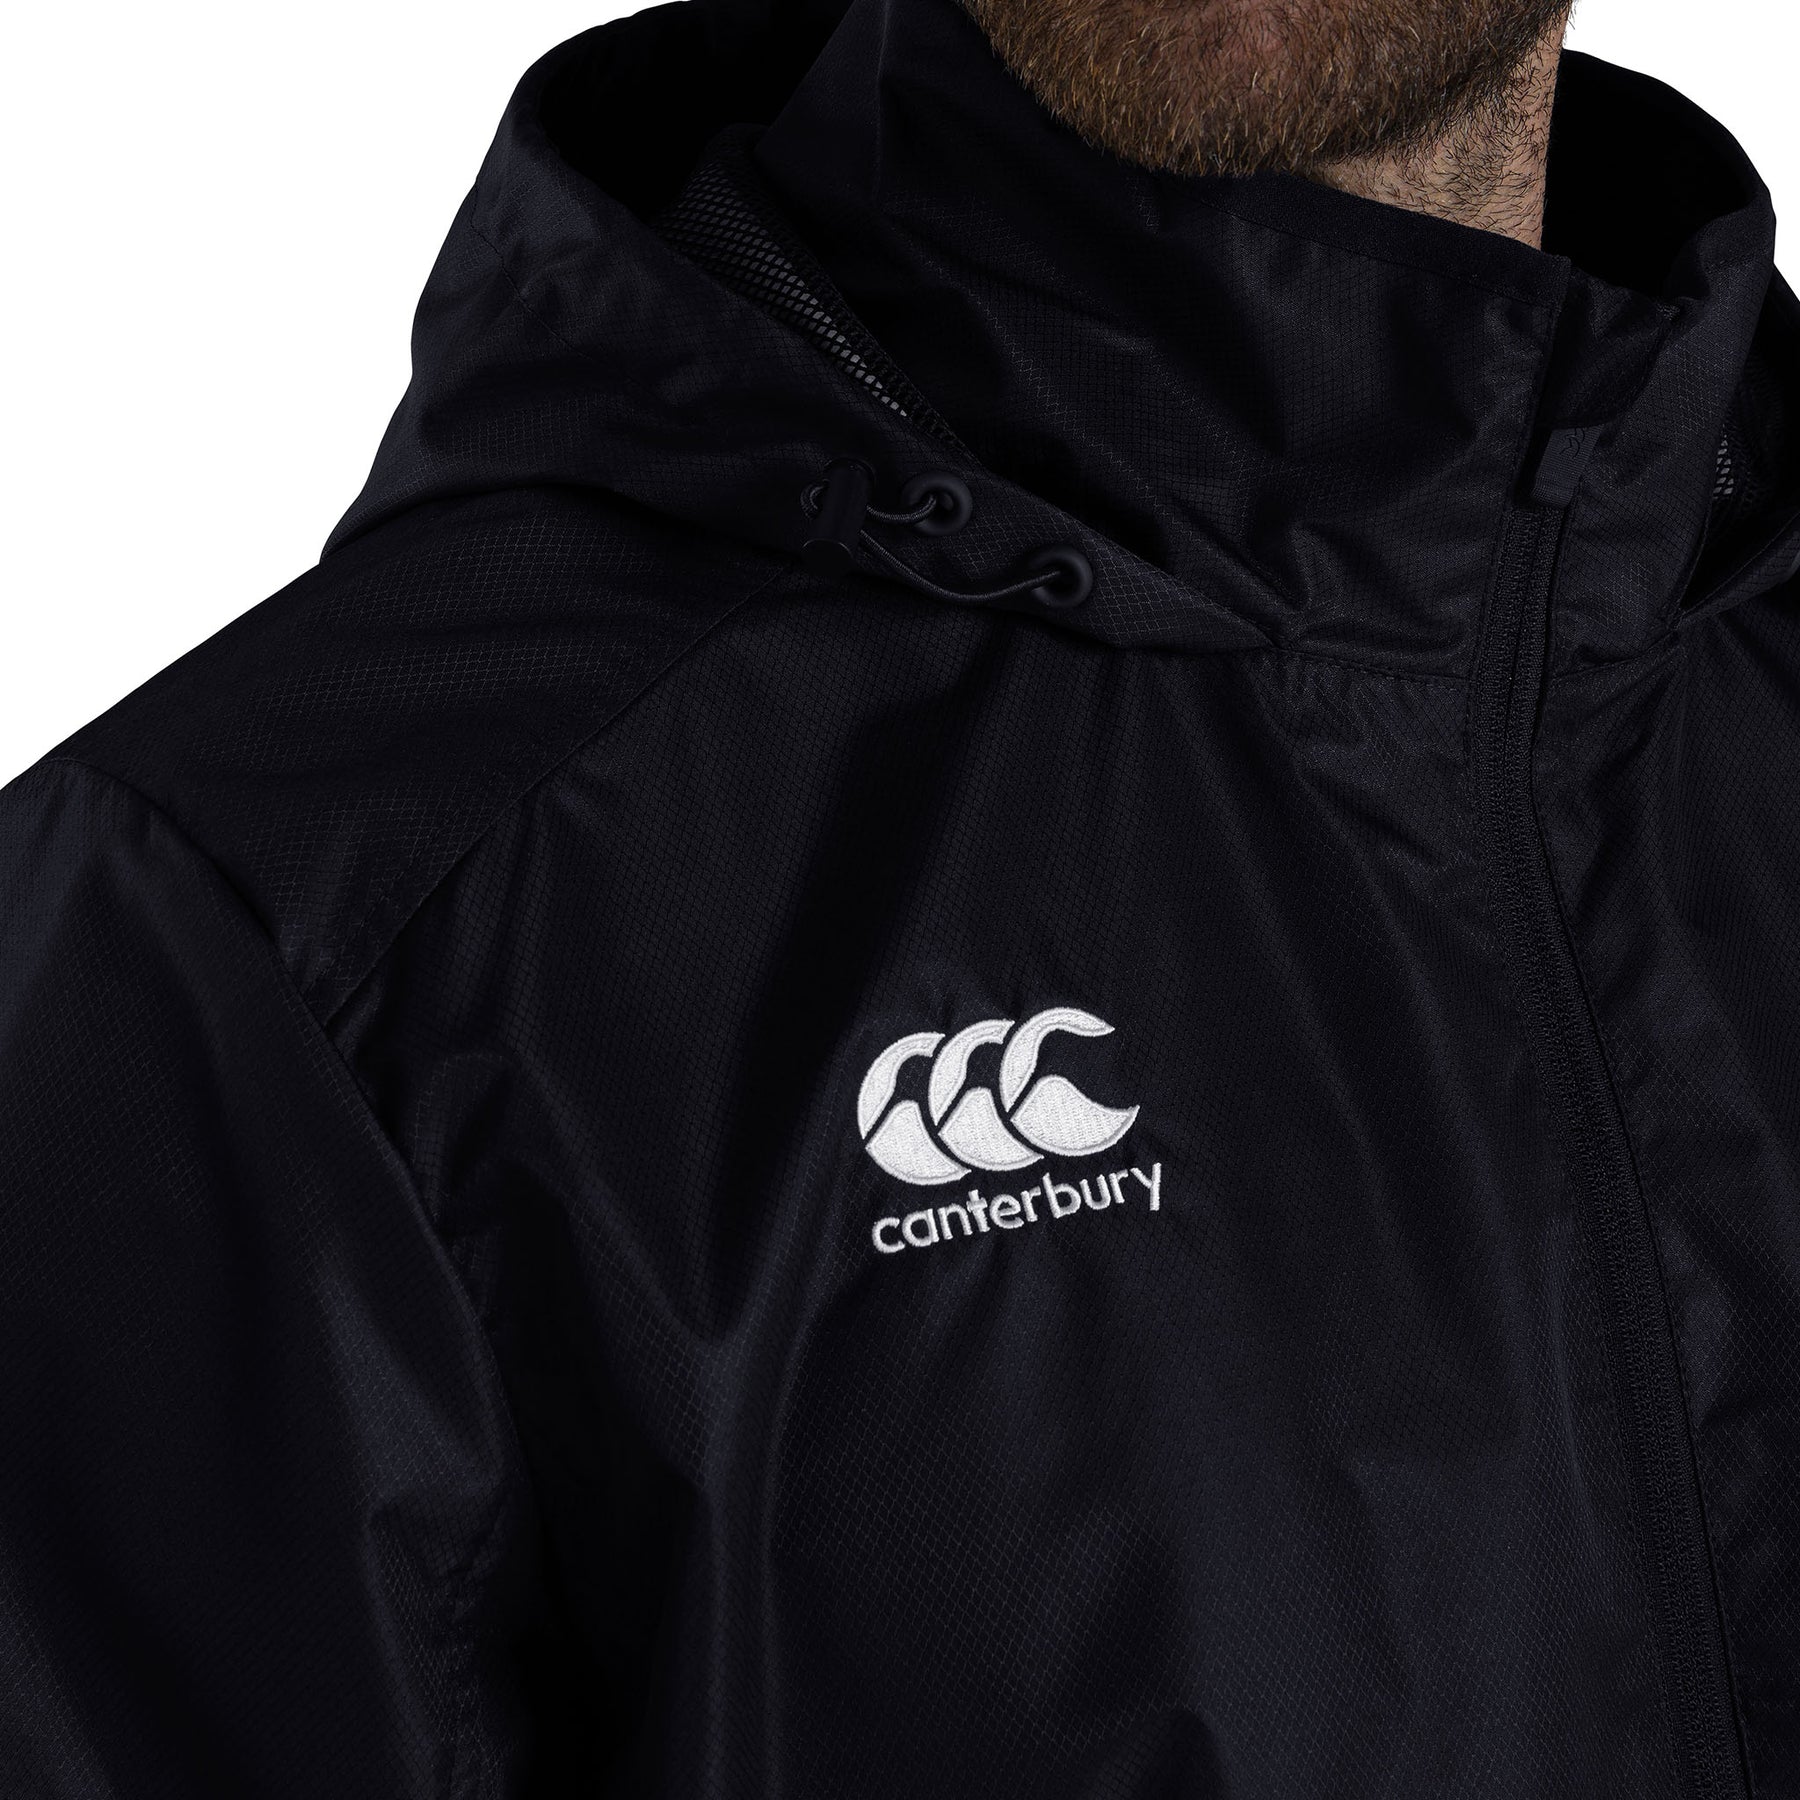 Beaconsfield RFC Canterbury Vaposhield Full Zip Jacket: Black